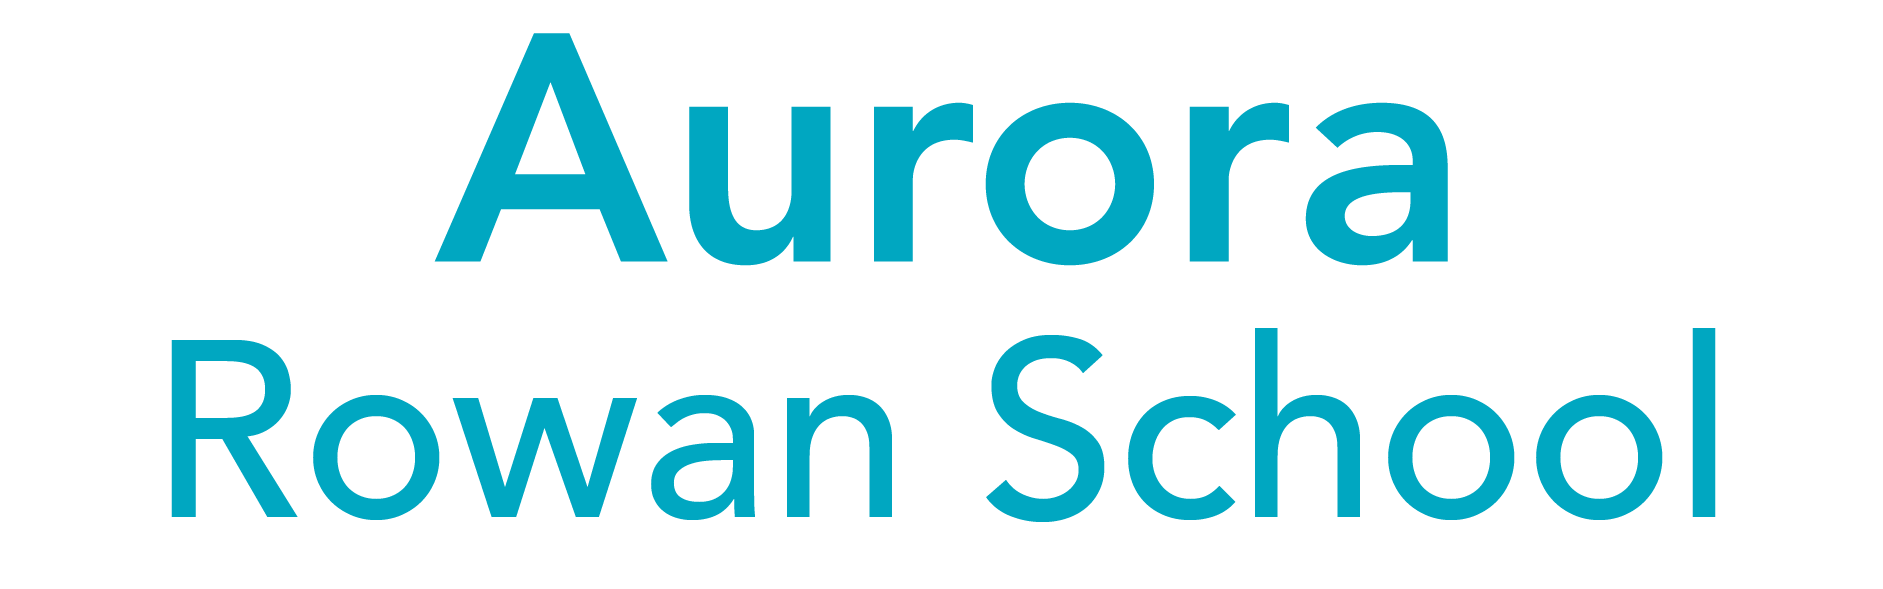 Aurora Rowan School